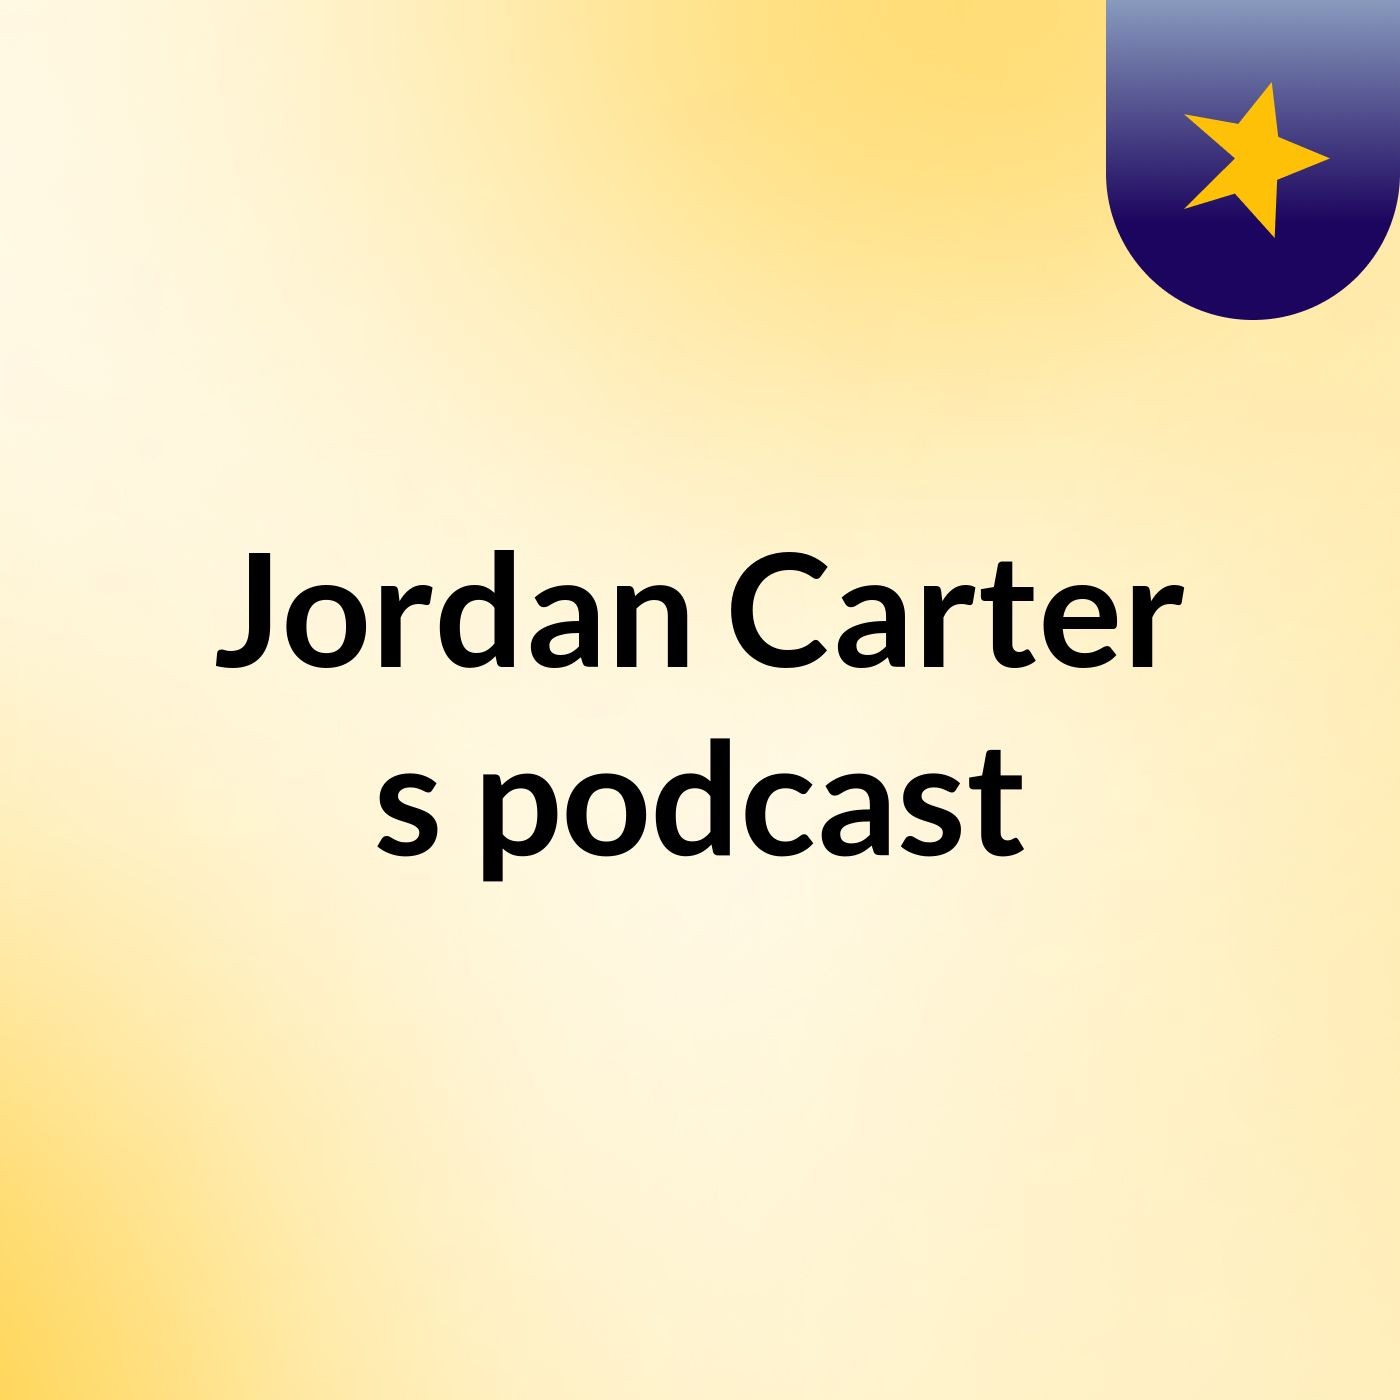 Episode 4 - Jordan Carter's podcast